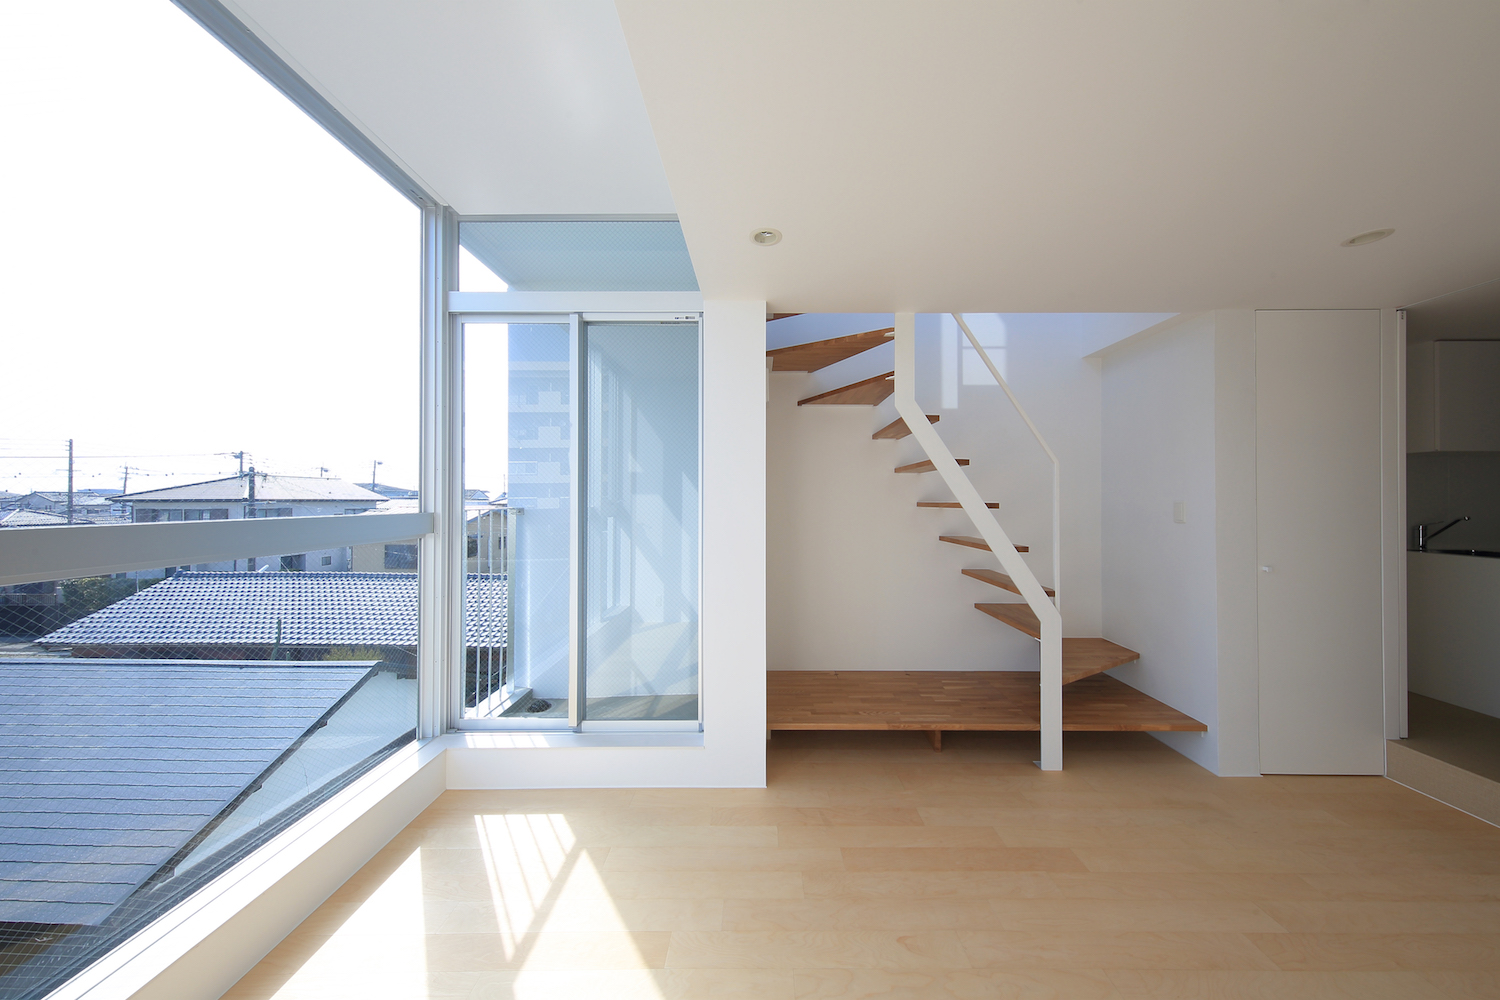 AKHA2 by Takeshi Ishiodori Architecture